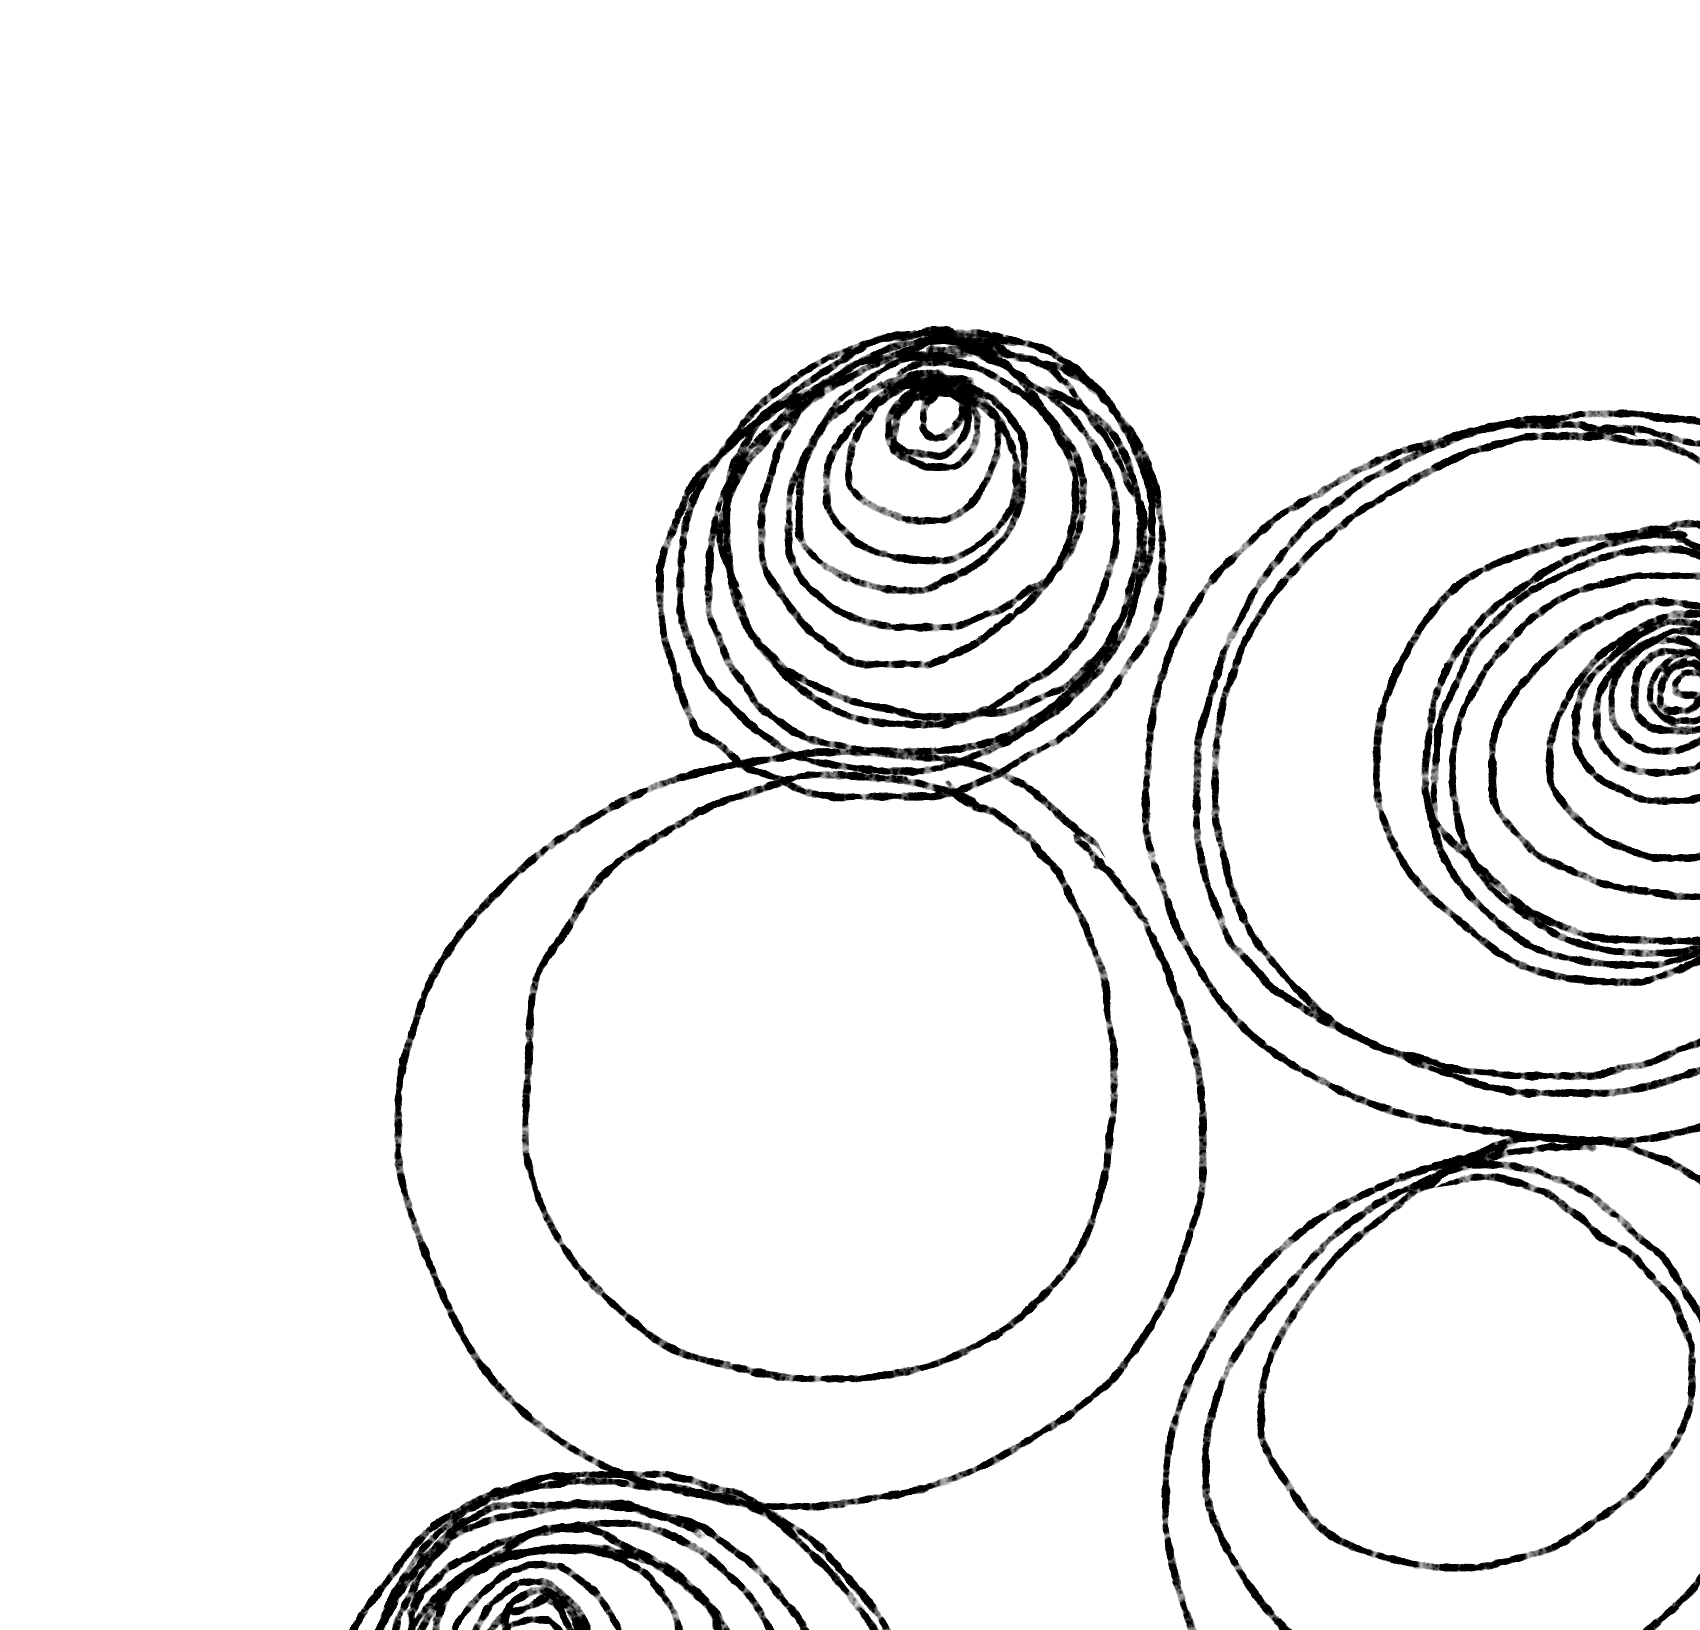 Illustration of circles, grouped